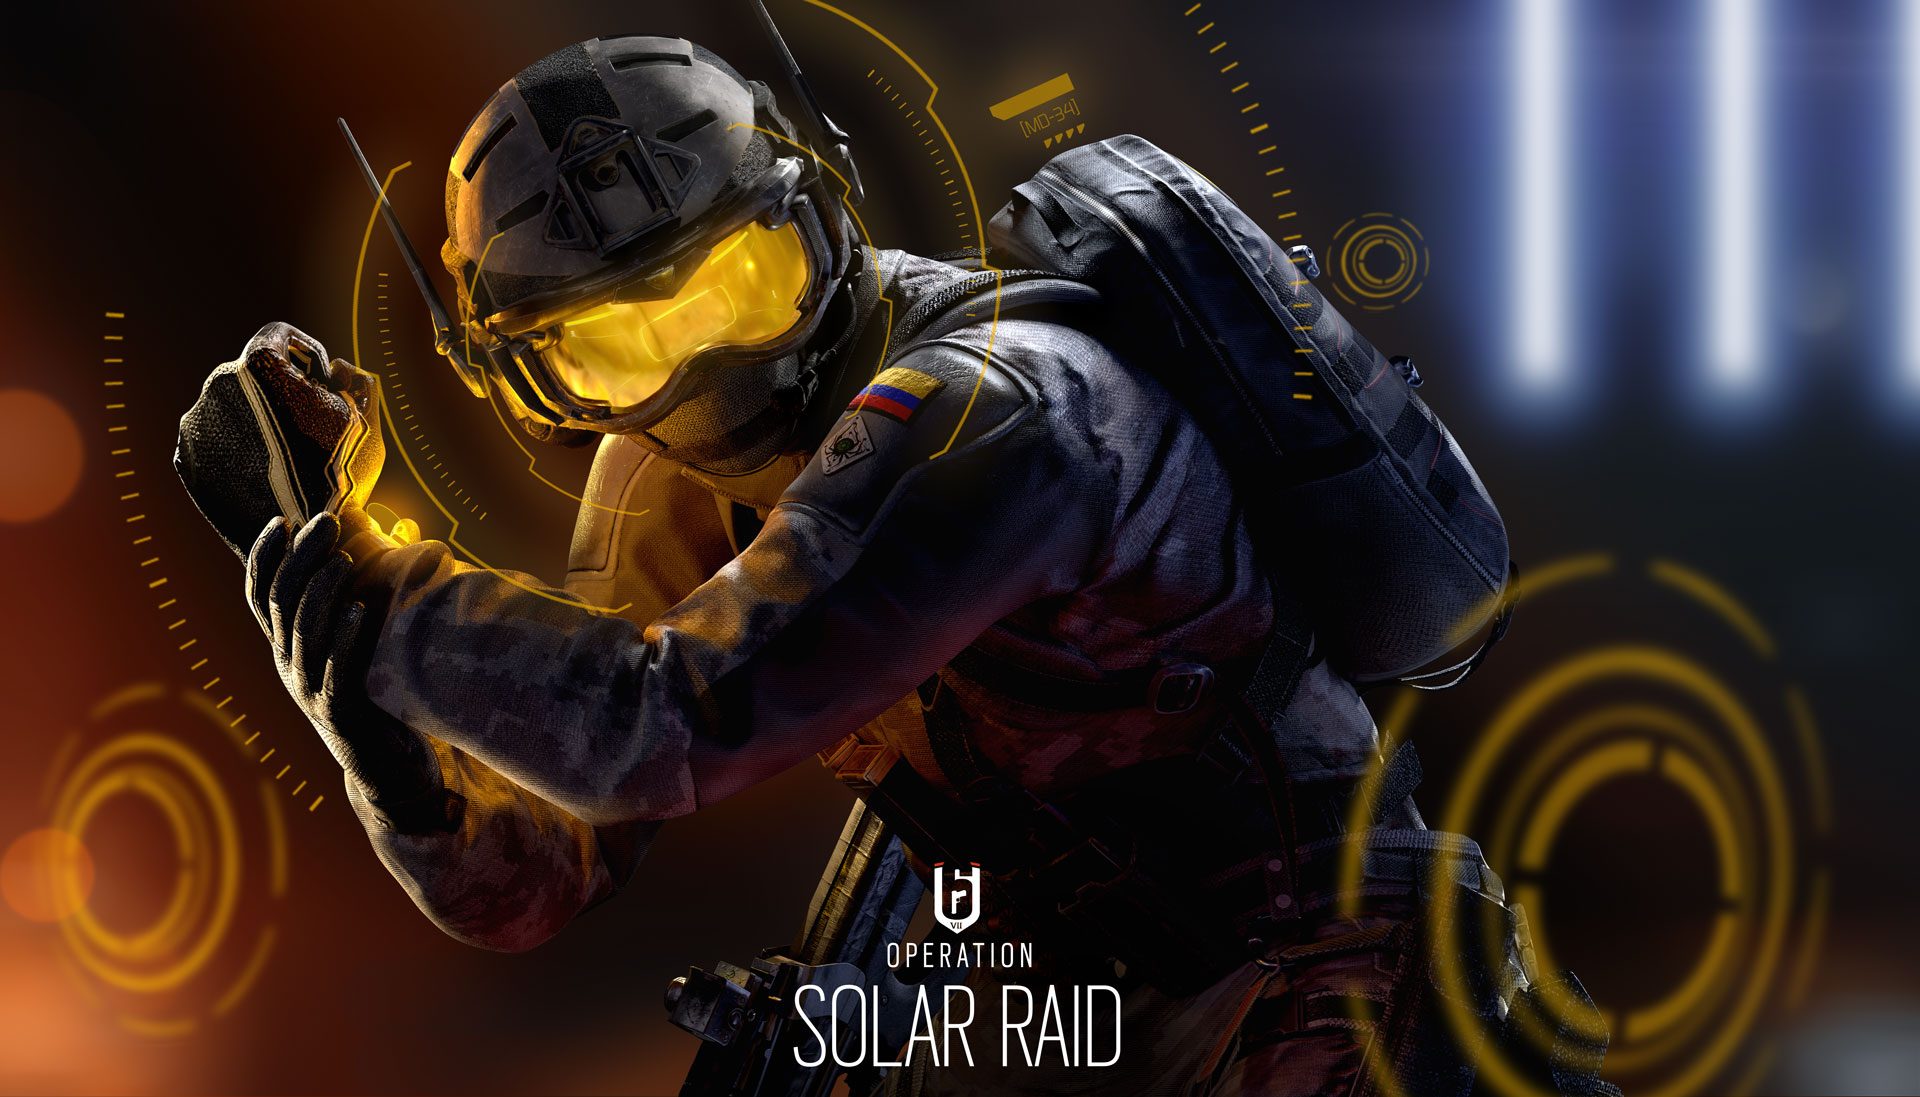 Rainbow Six Siege Operation Solar Raid brings new Operator, map and cross-play